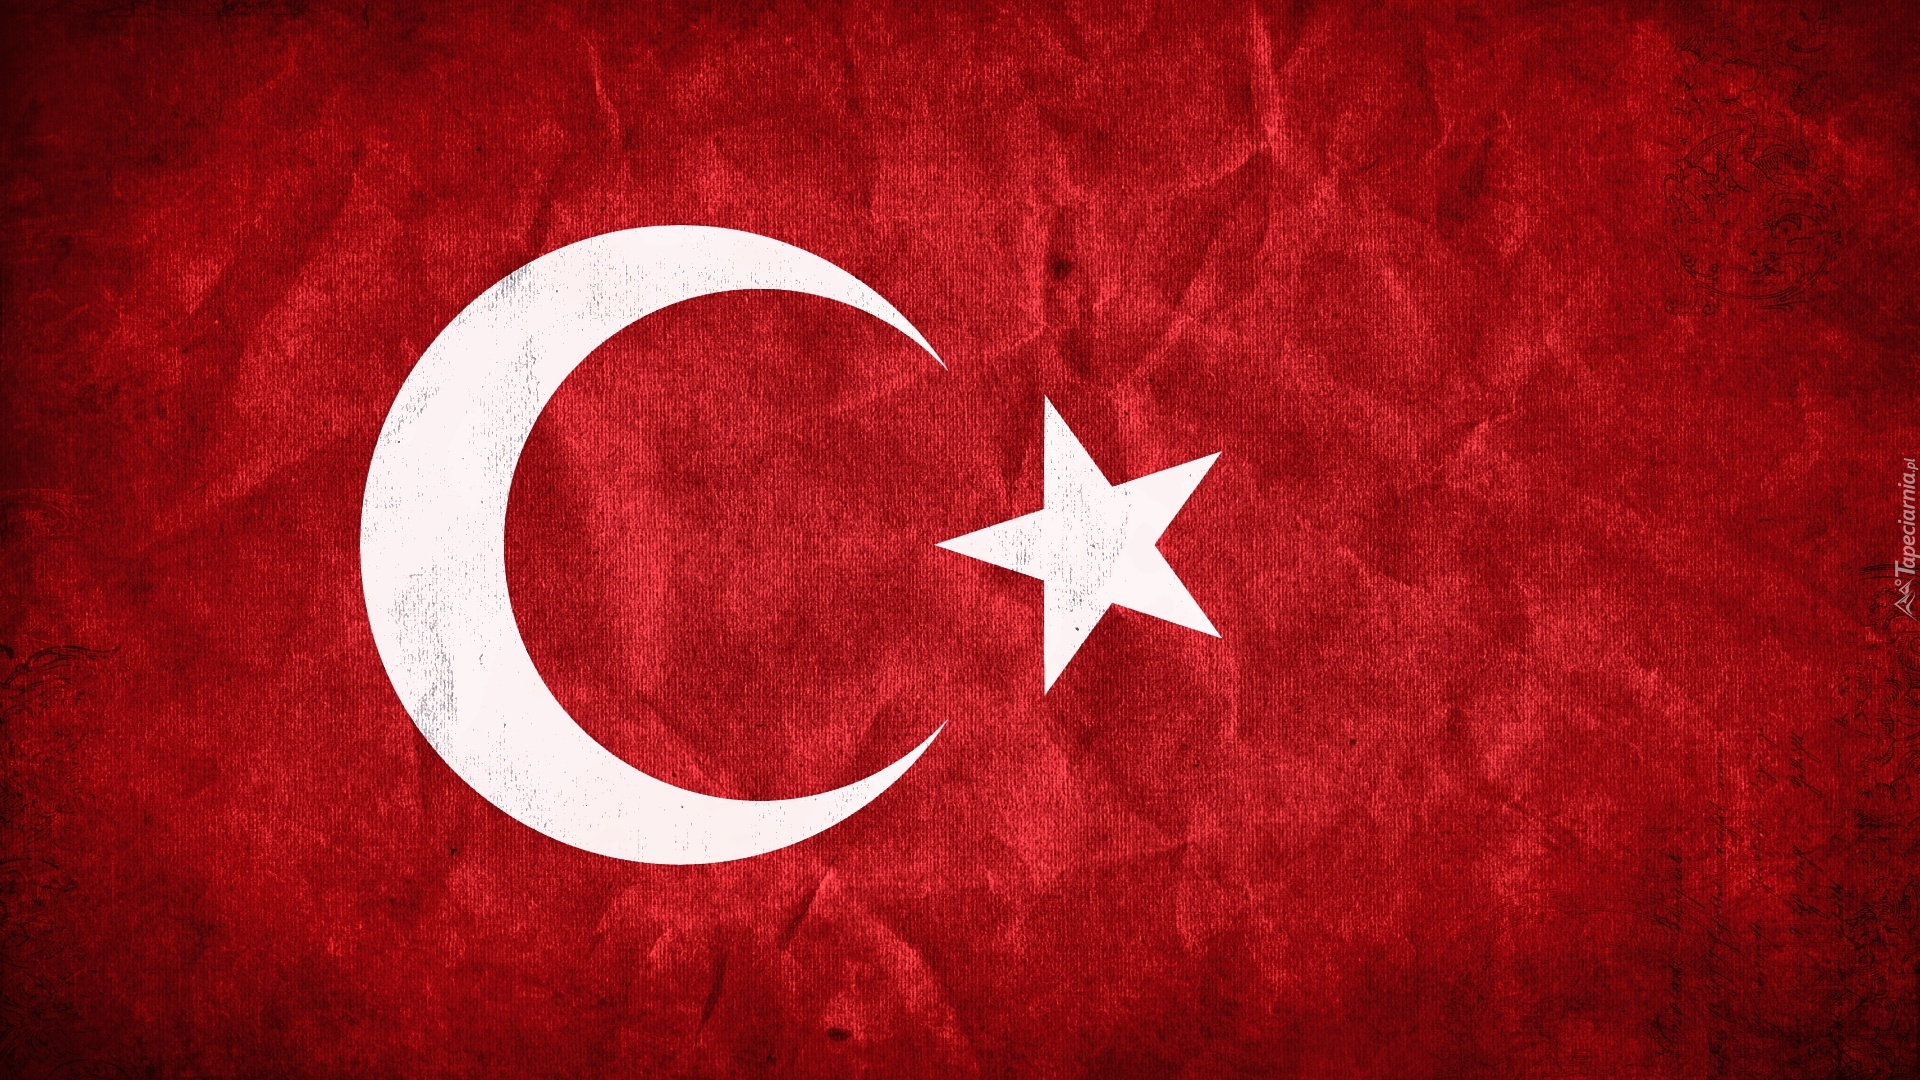 Flaga, Państwo, Turcja